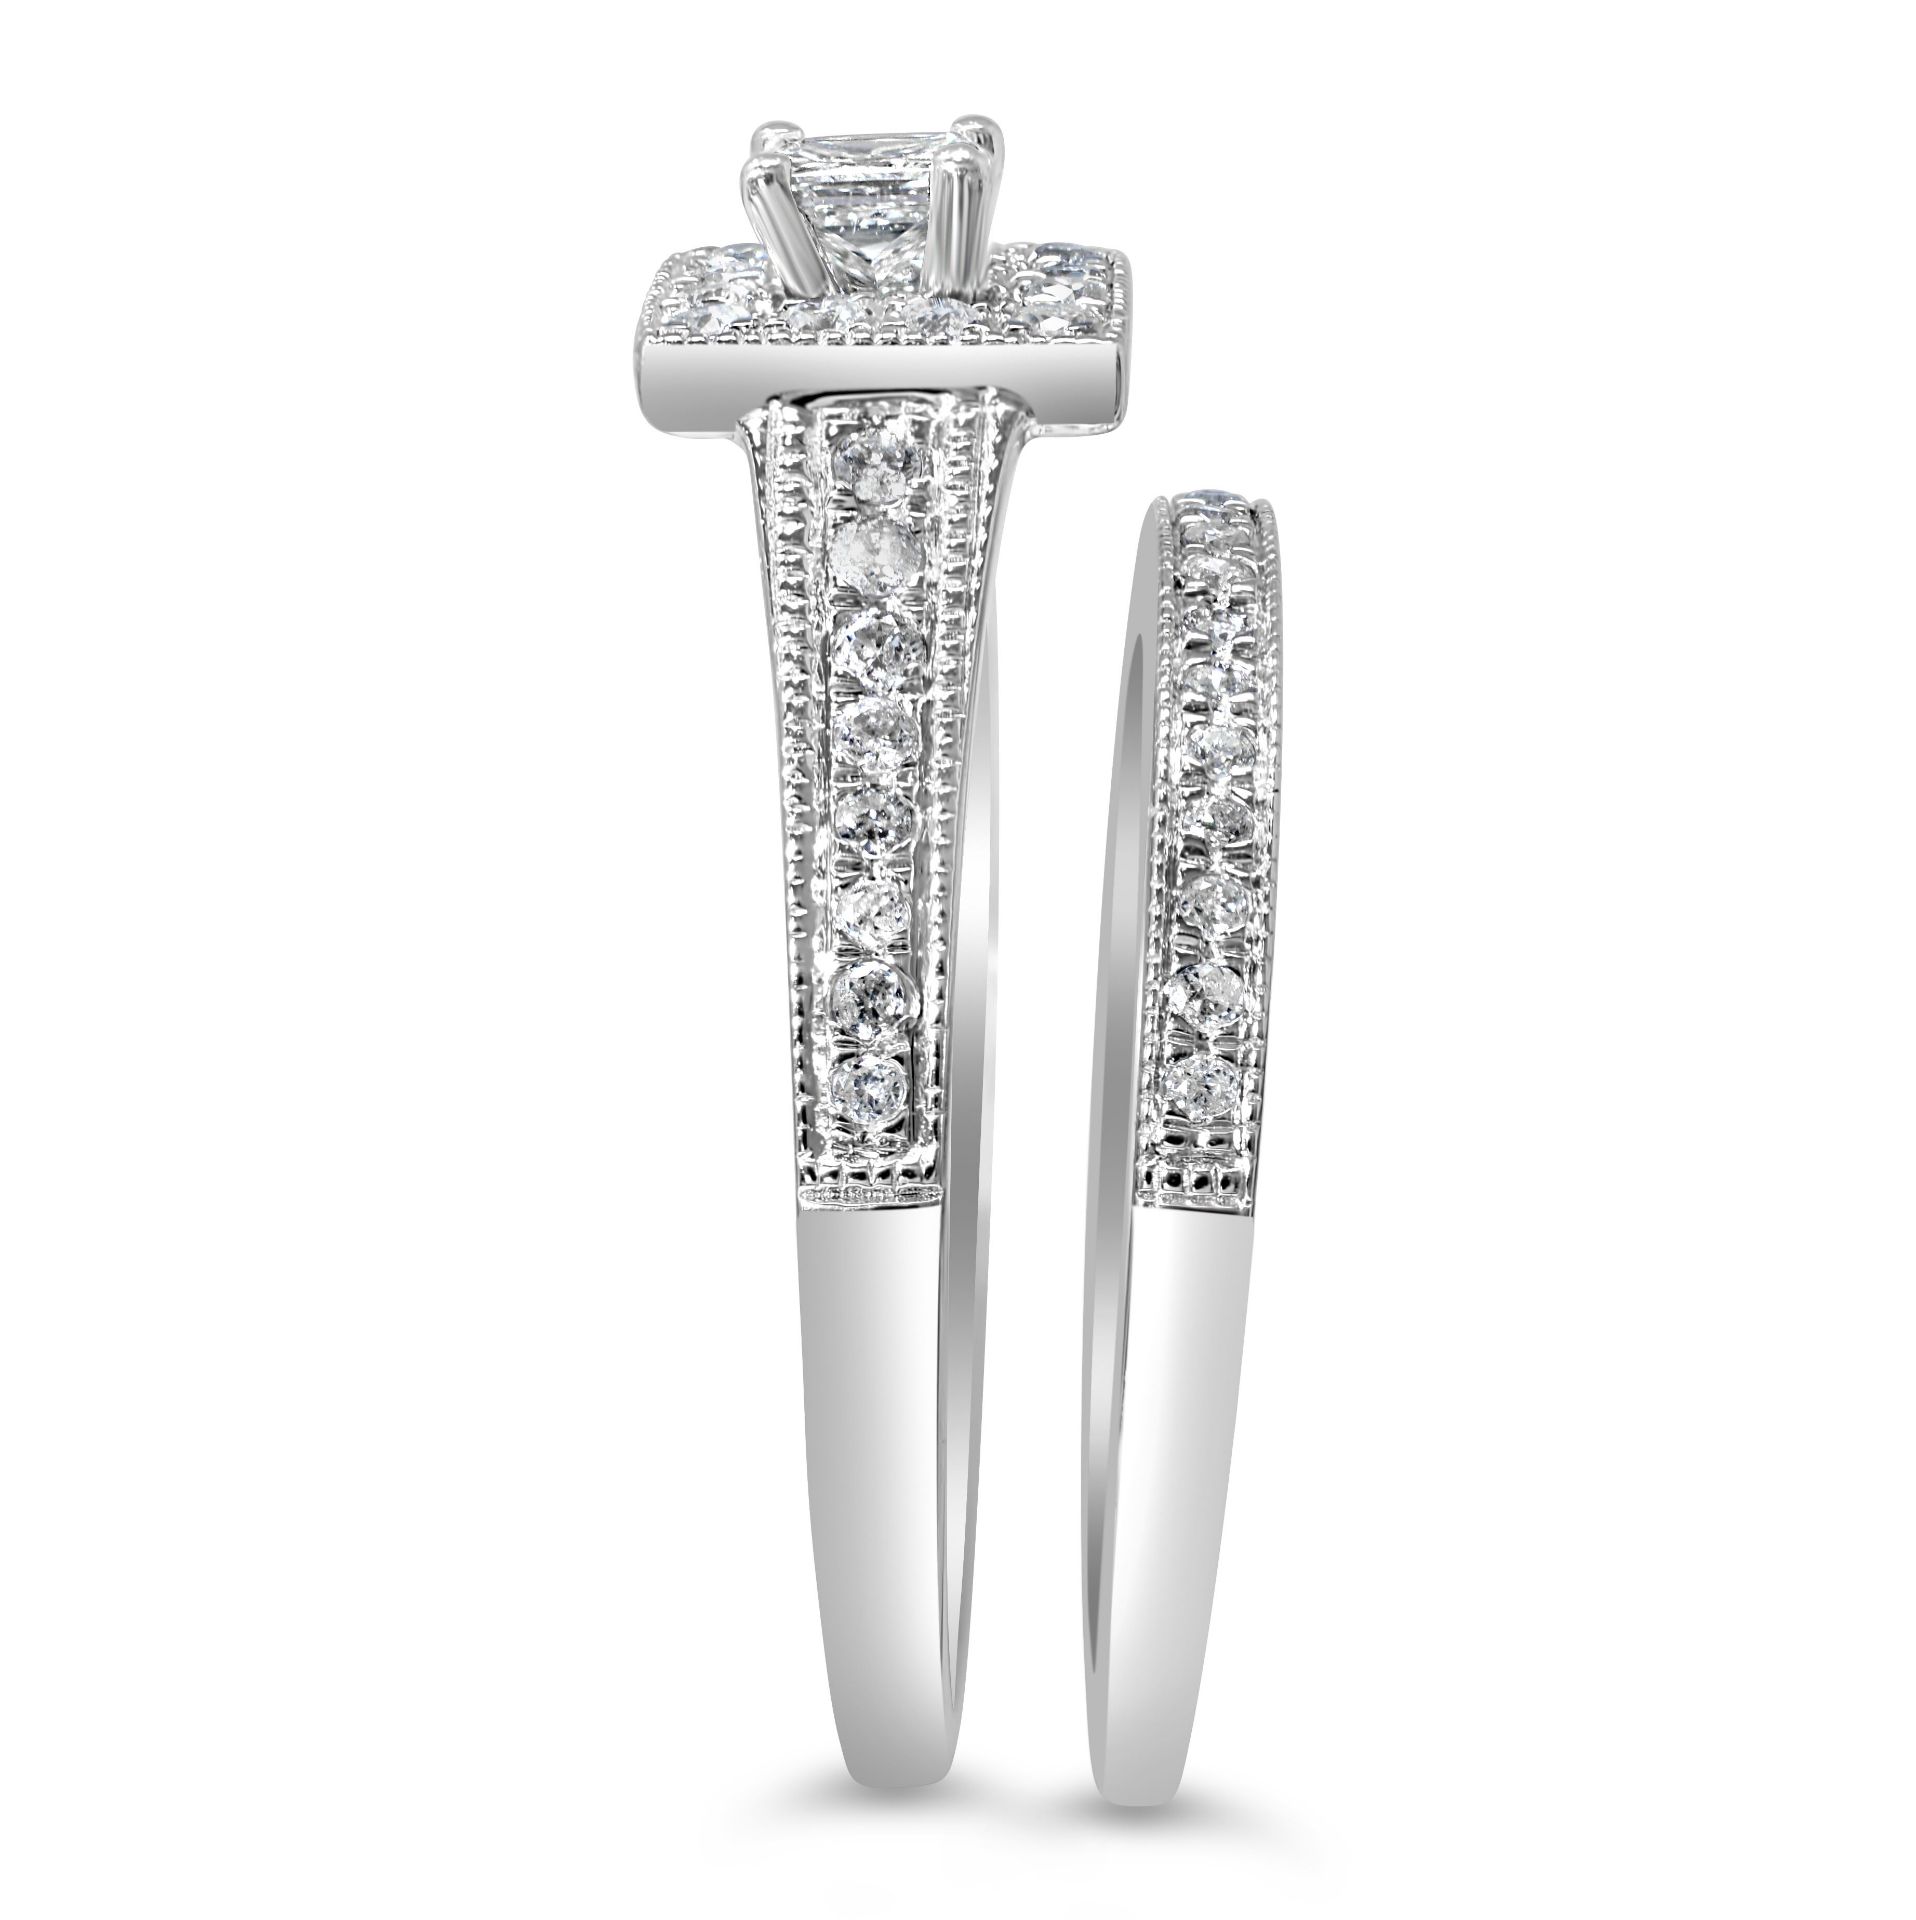 Bridal Set Of Princess cut Diamond Engagement and Wedding Ring in White Gold, Metal 9ct White - Image 2 of 4